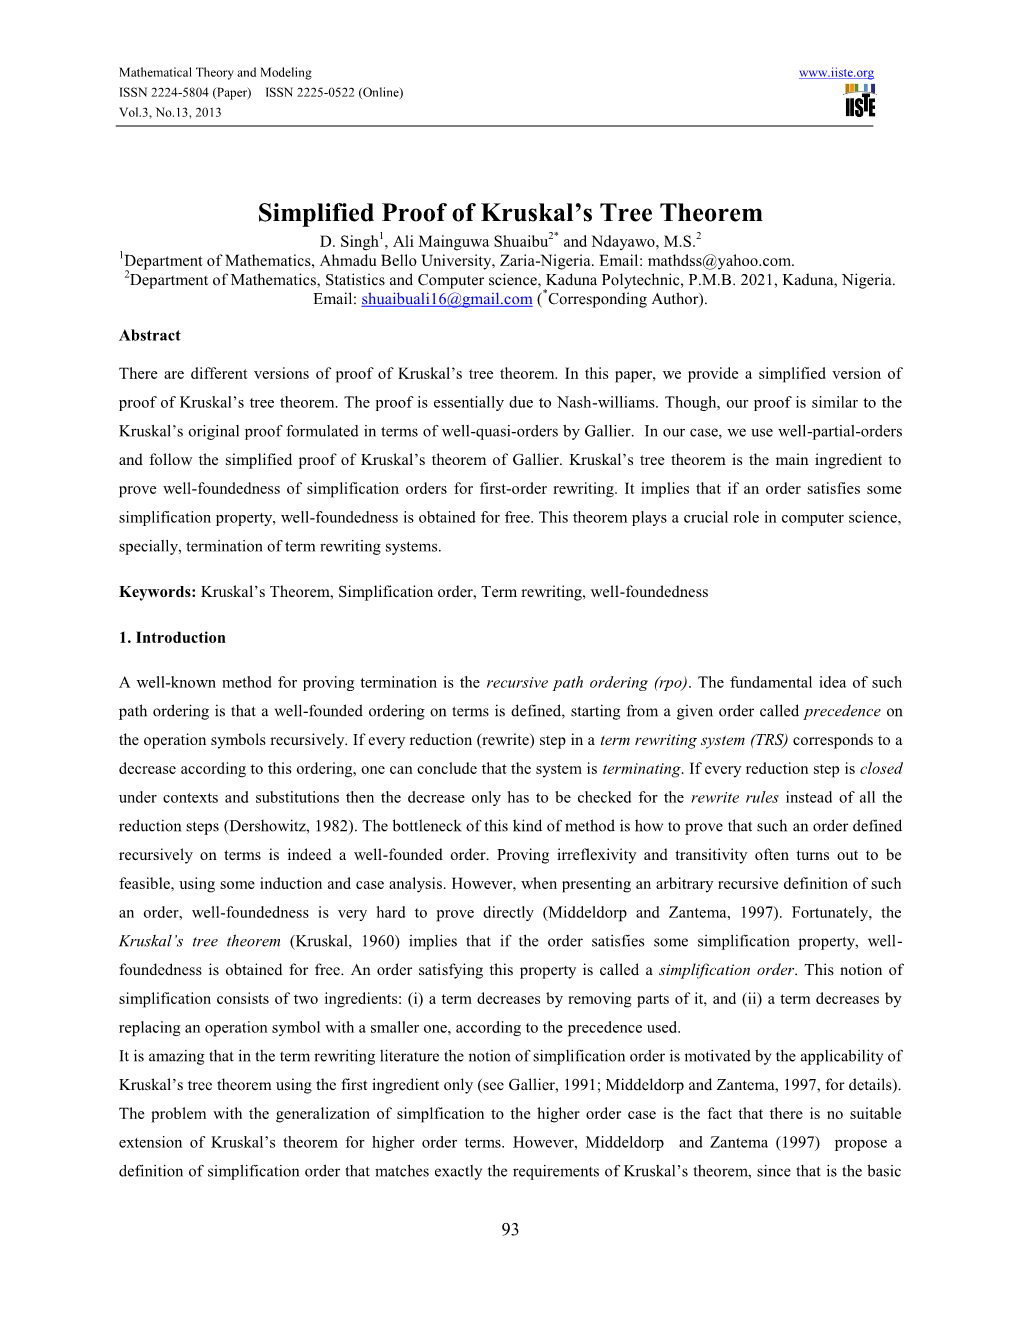 Simplified Proof of Kruskal's Tree Theorem